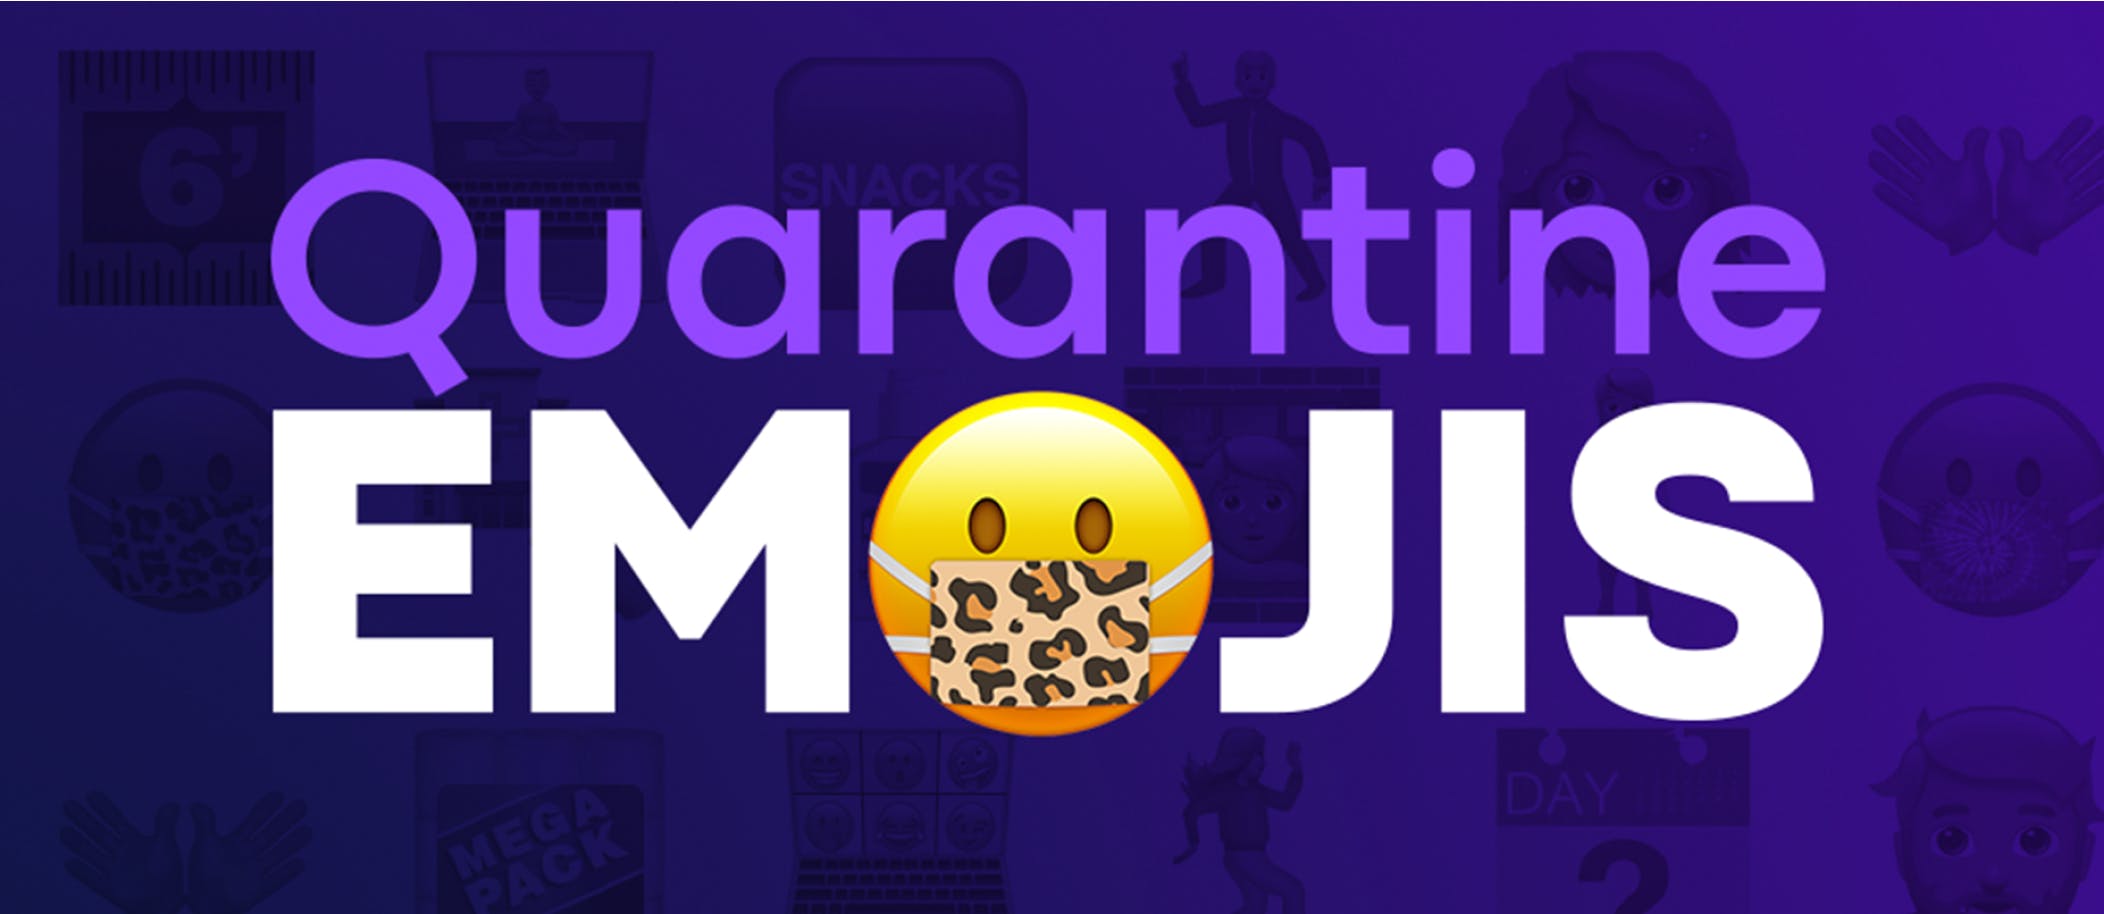 Quarantine emojis